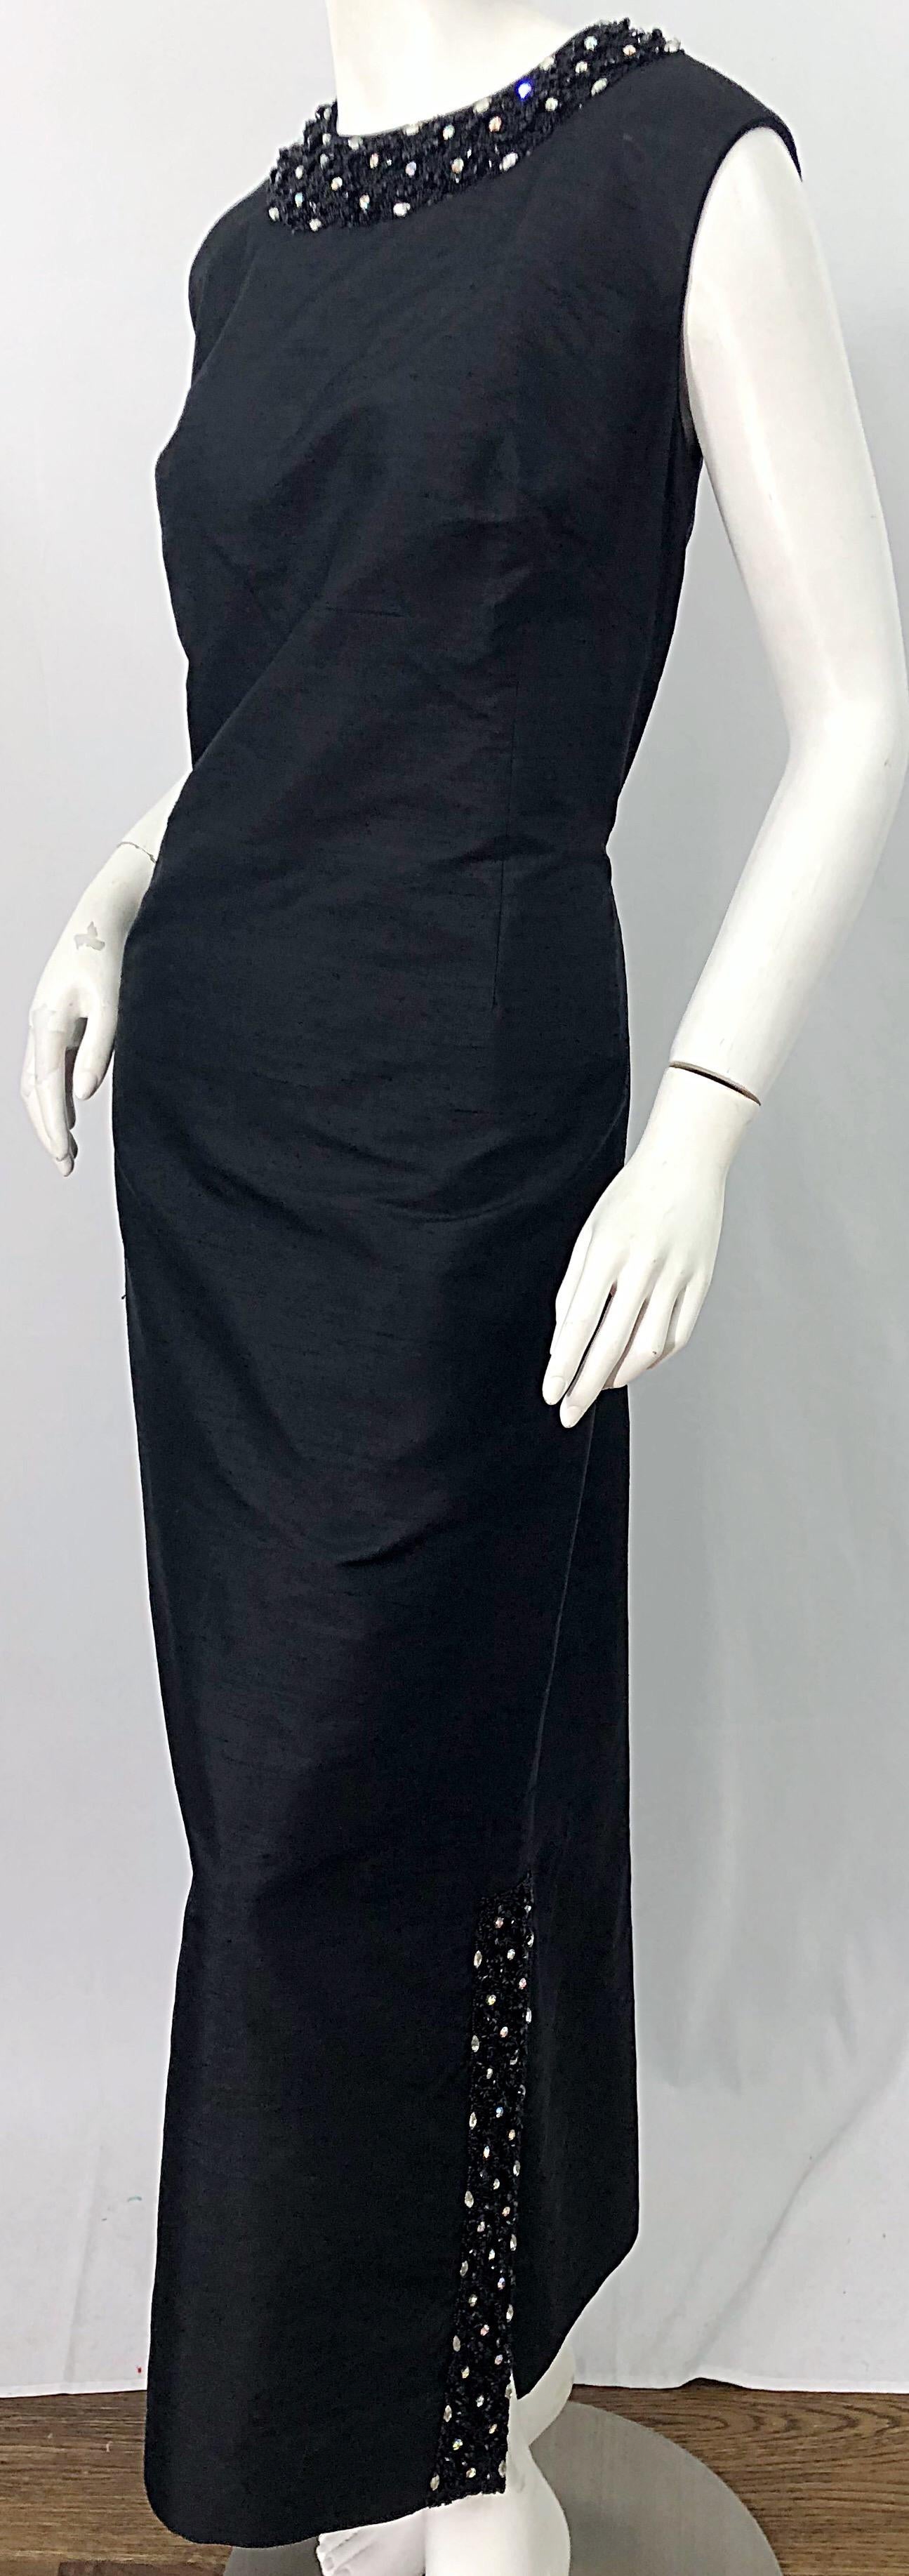 1960s black dress